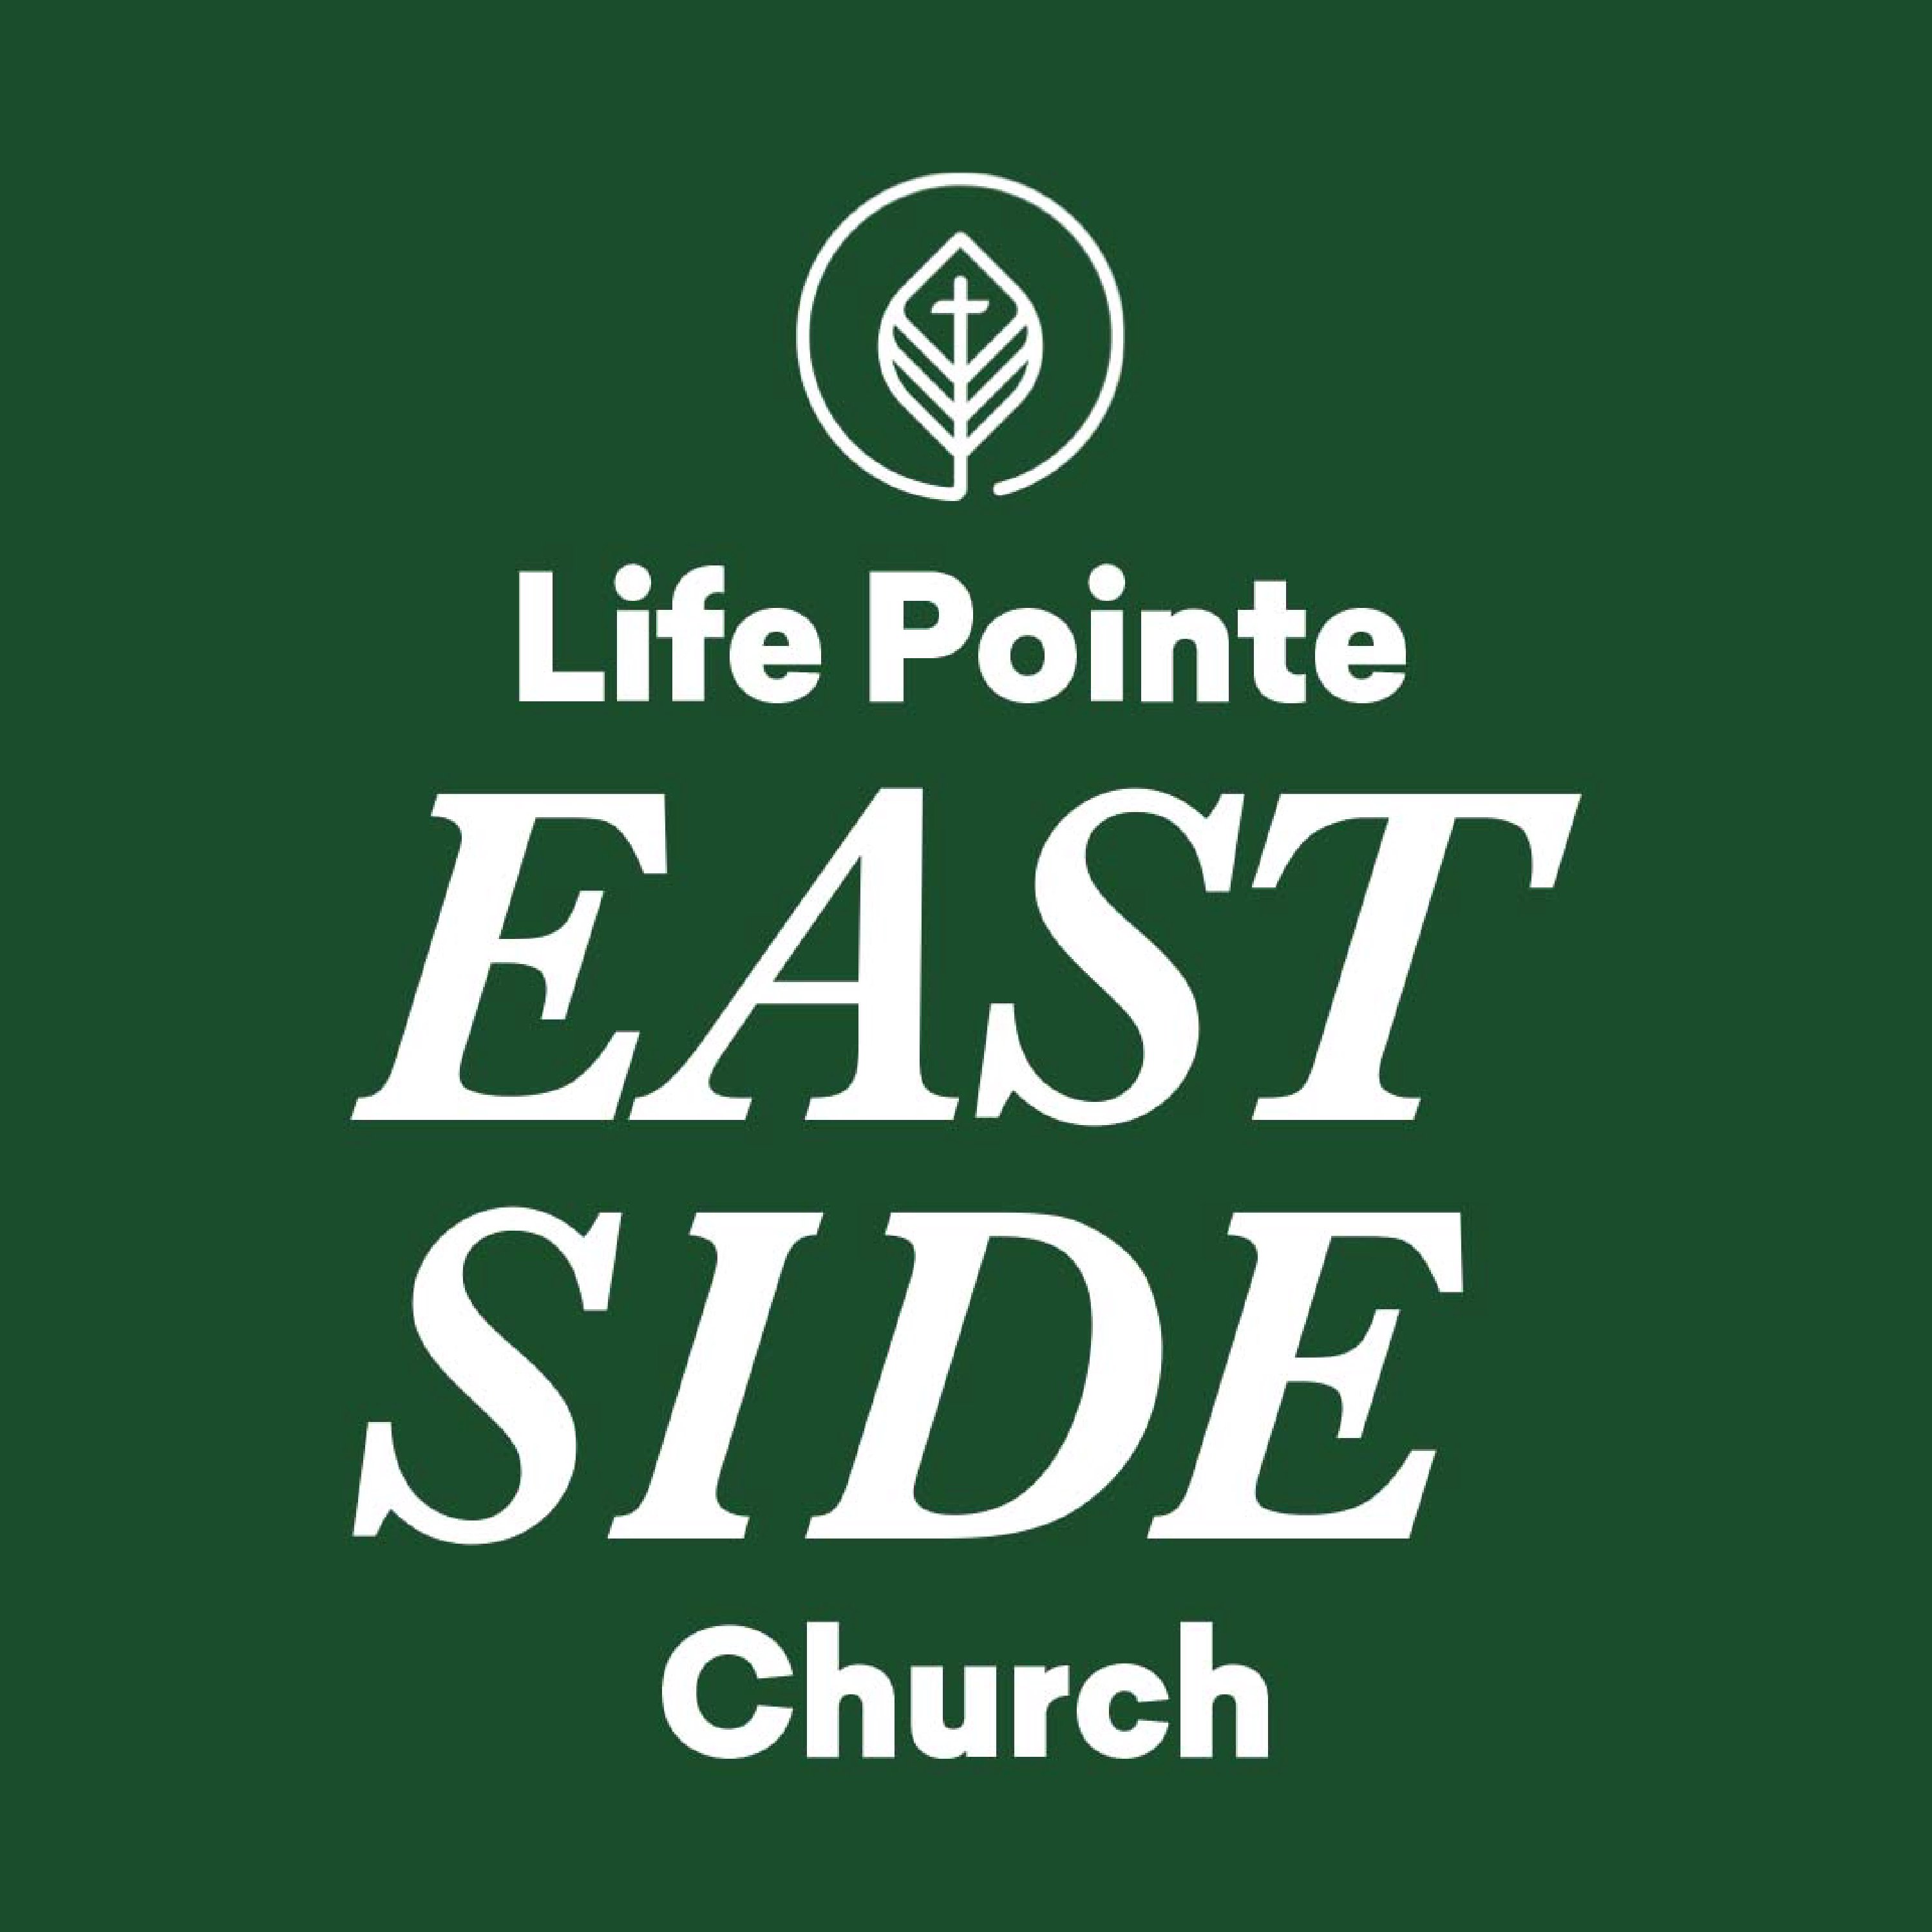 Life Pointe Eastside Church